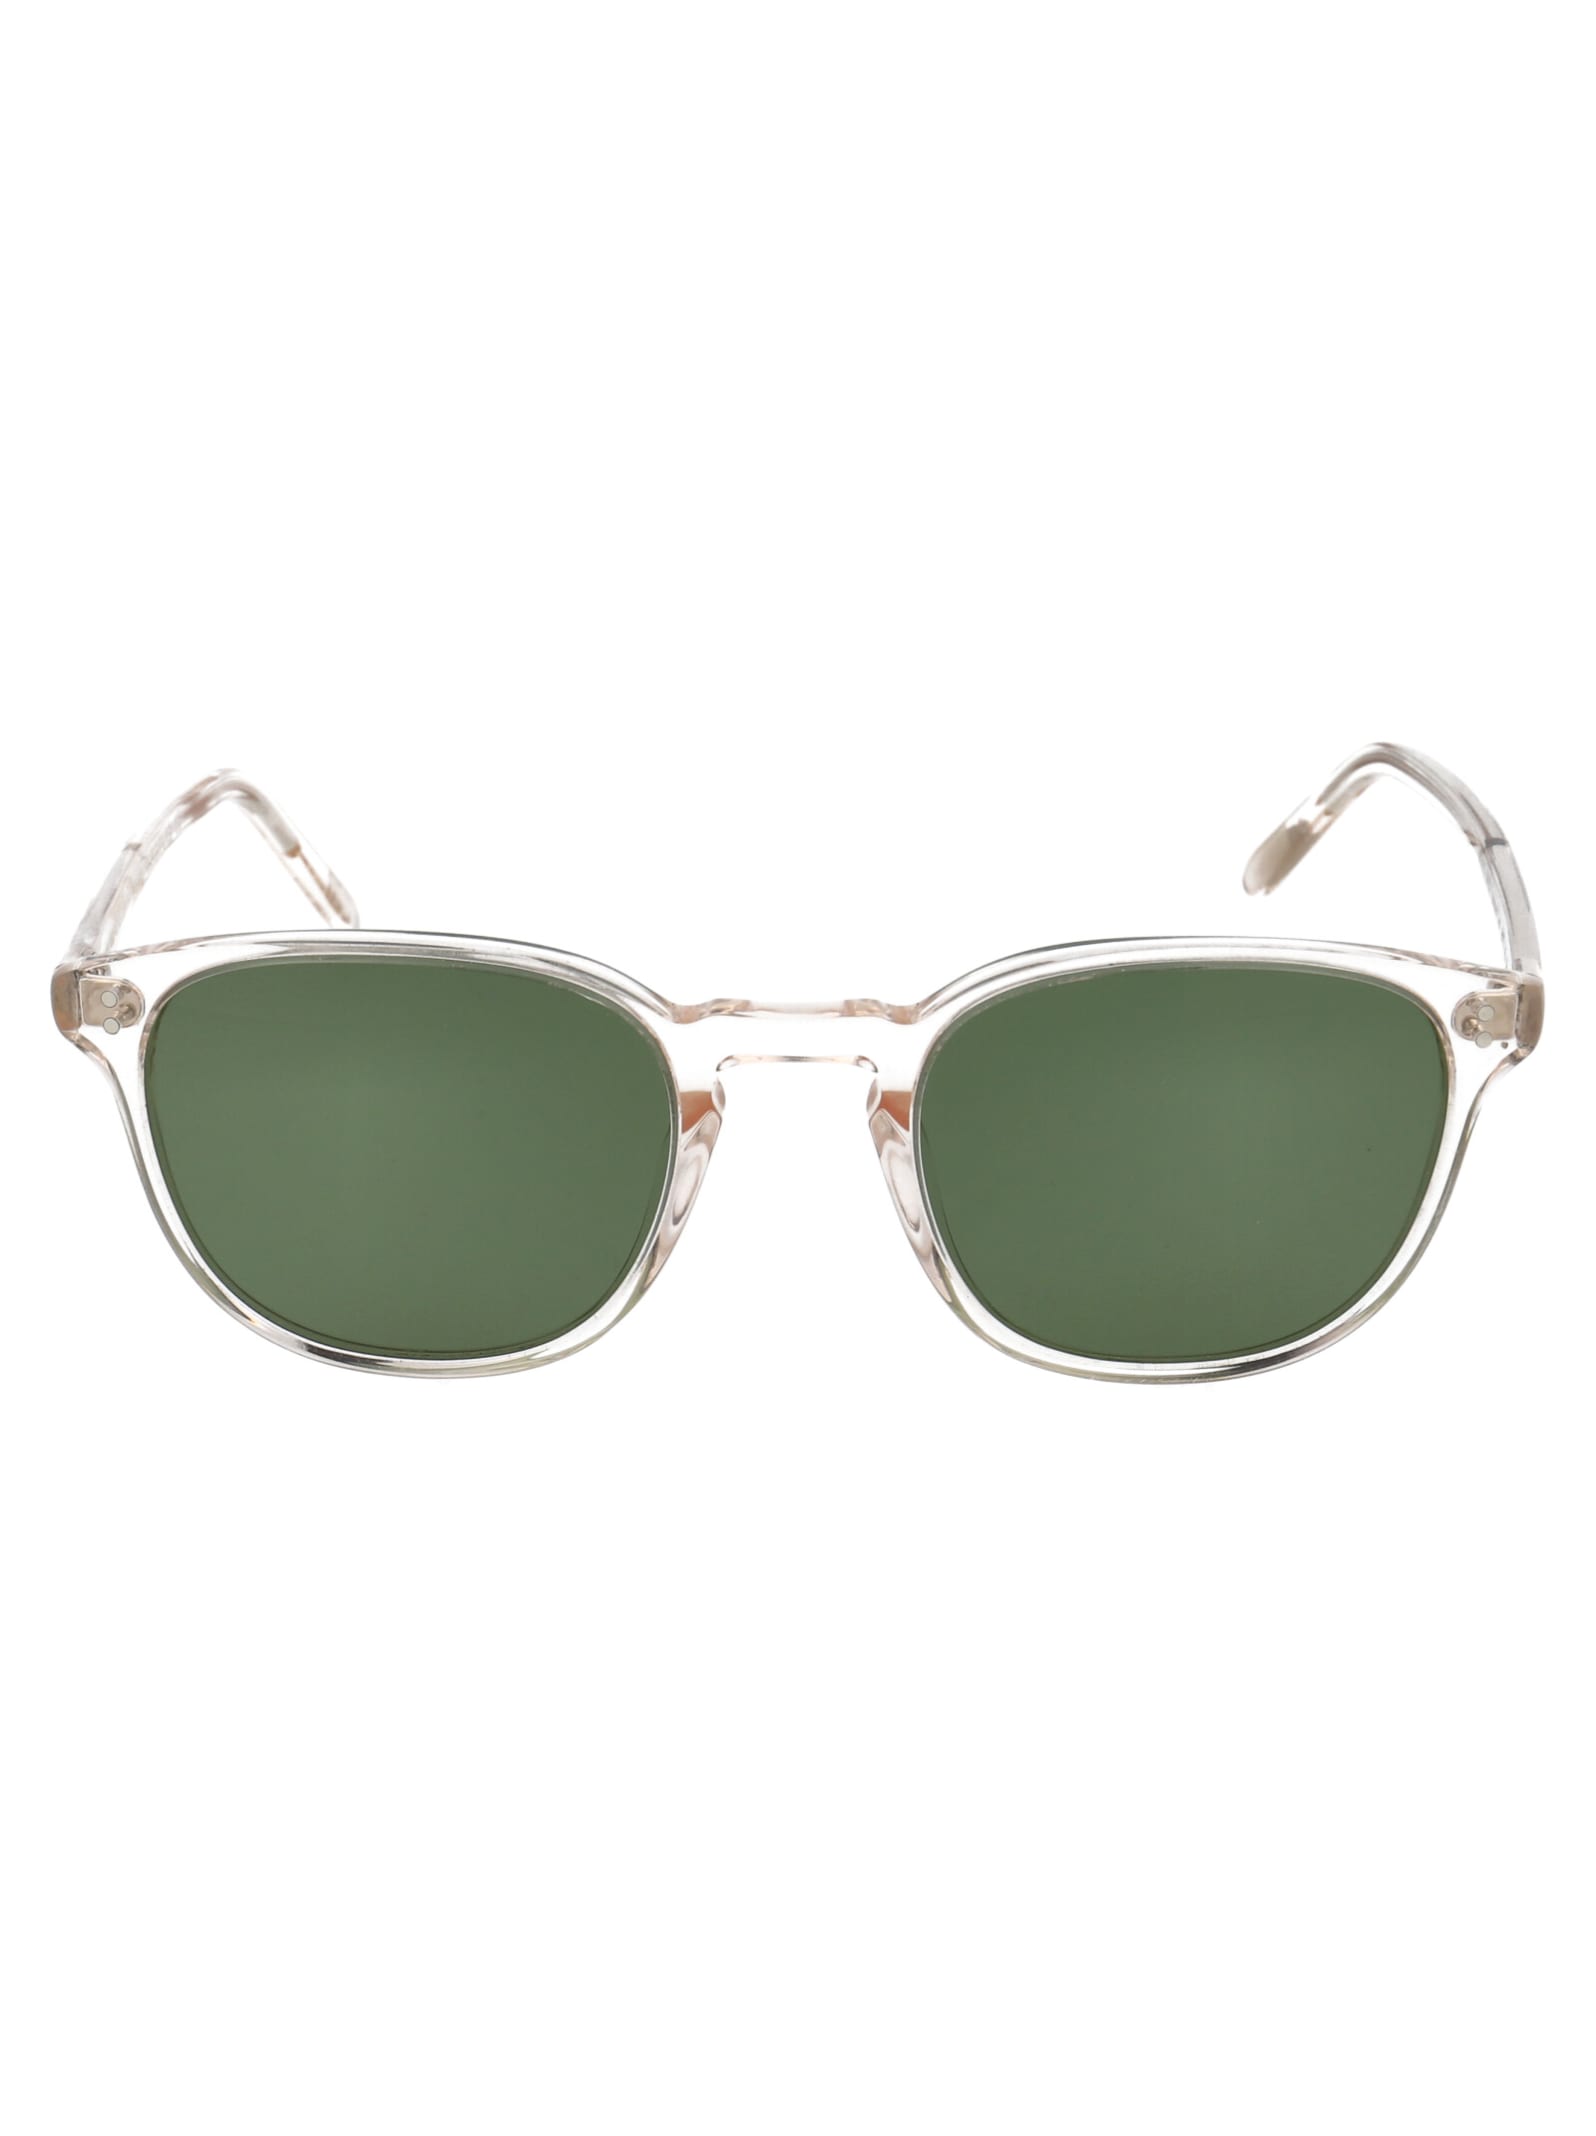 Oliver Peoples Fairmont Sun Sunglasses